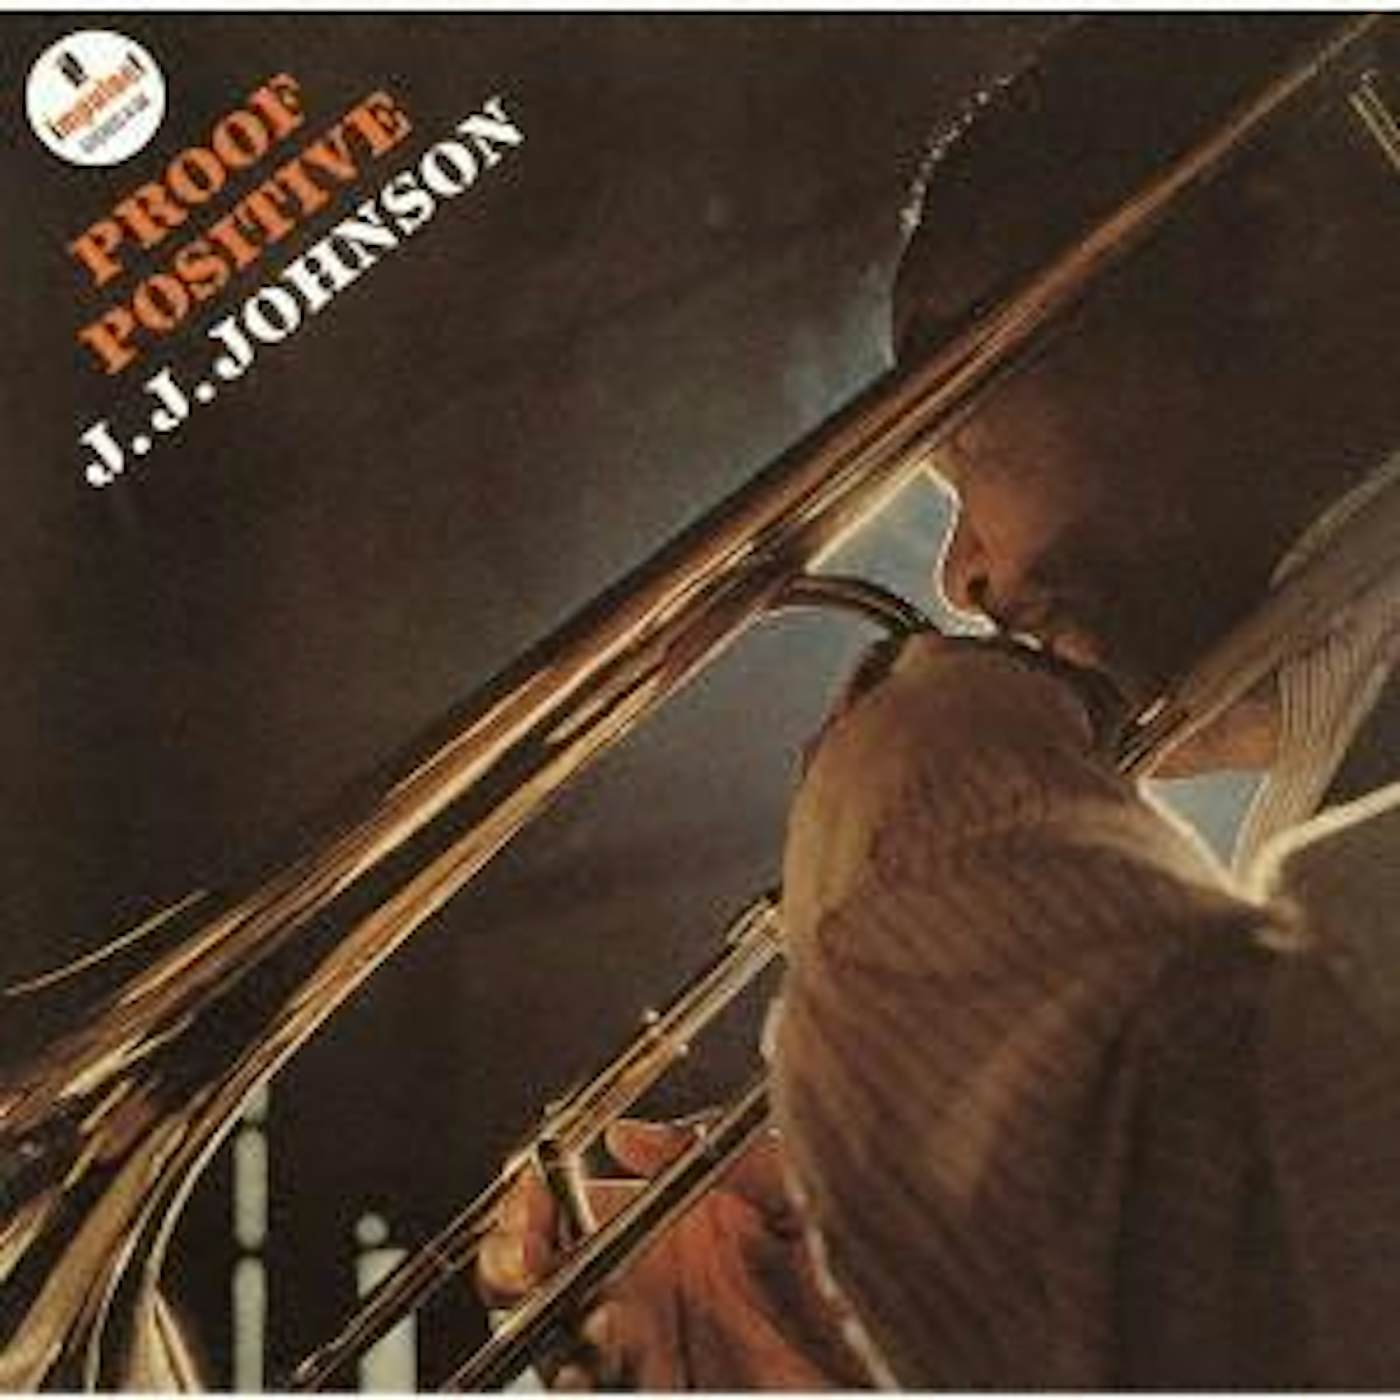 J.J. Johnson PROOF POSITIVE CD